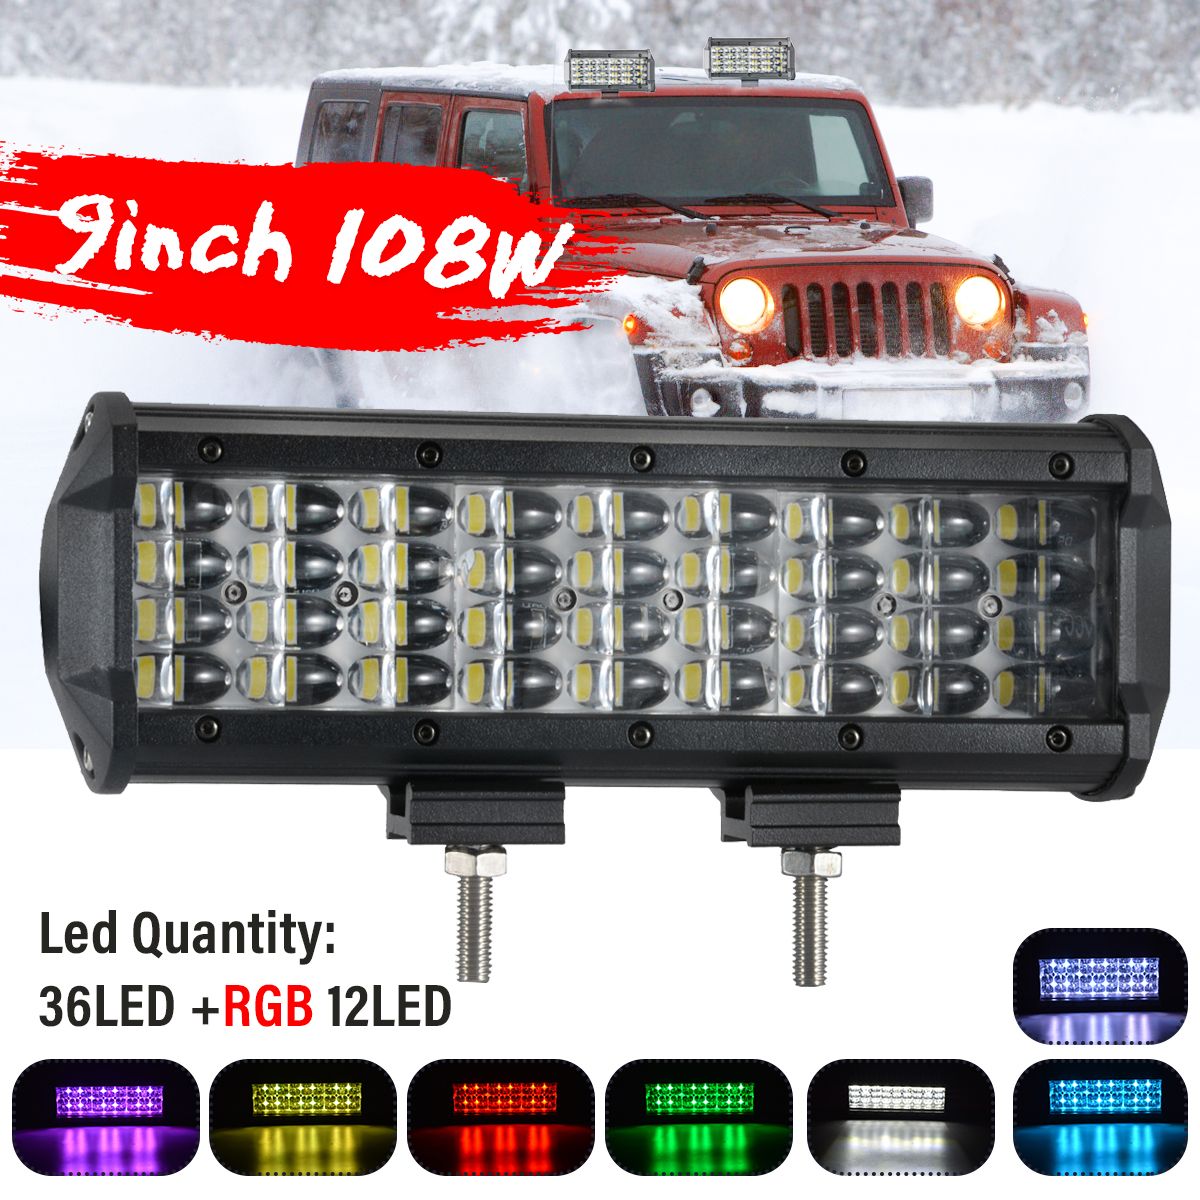 108W-9-Inch-RGB-LED-Work-Light-Bar-Driving-Fog-Lamp-10-32V-For-4WD-SUV-Truck-UTE-Offroad-ATV-1705207